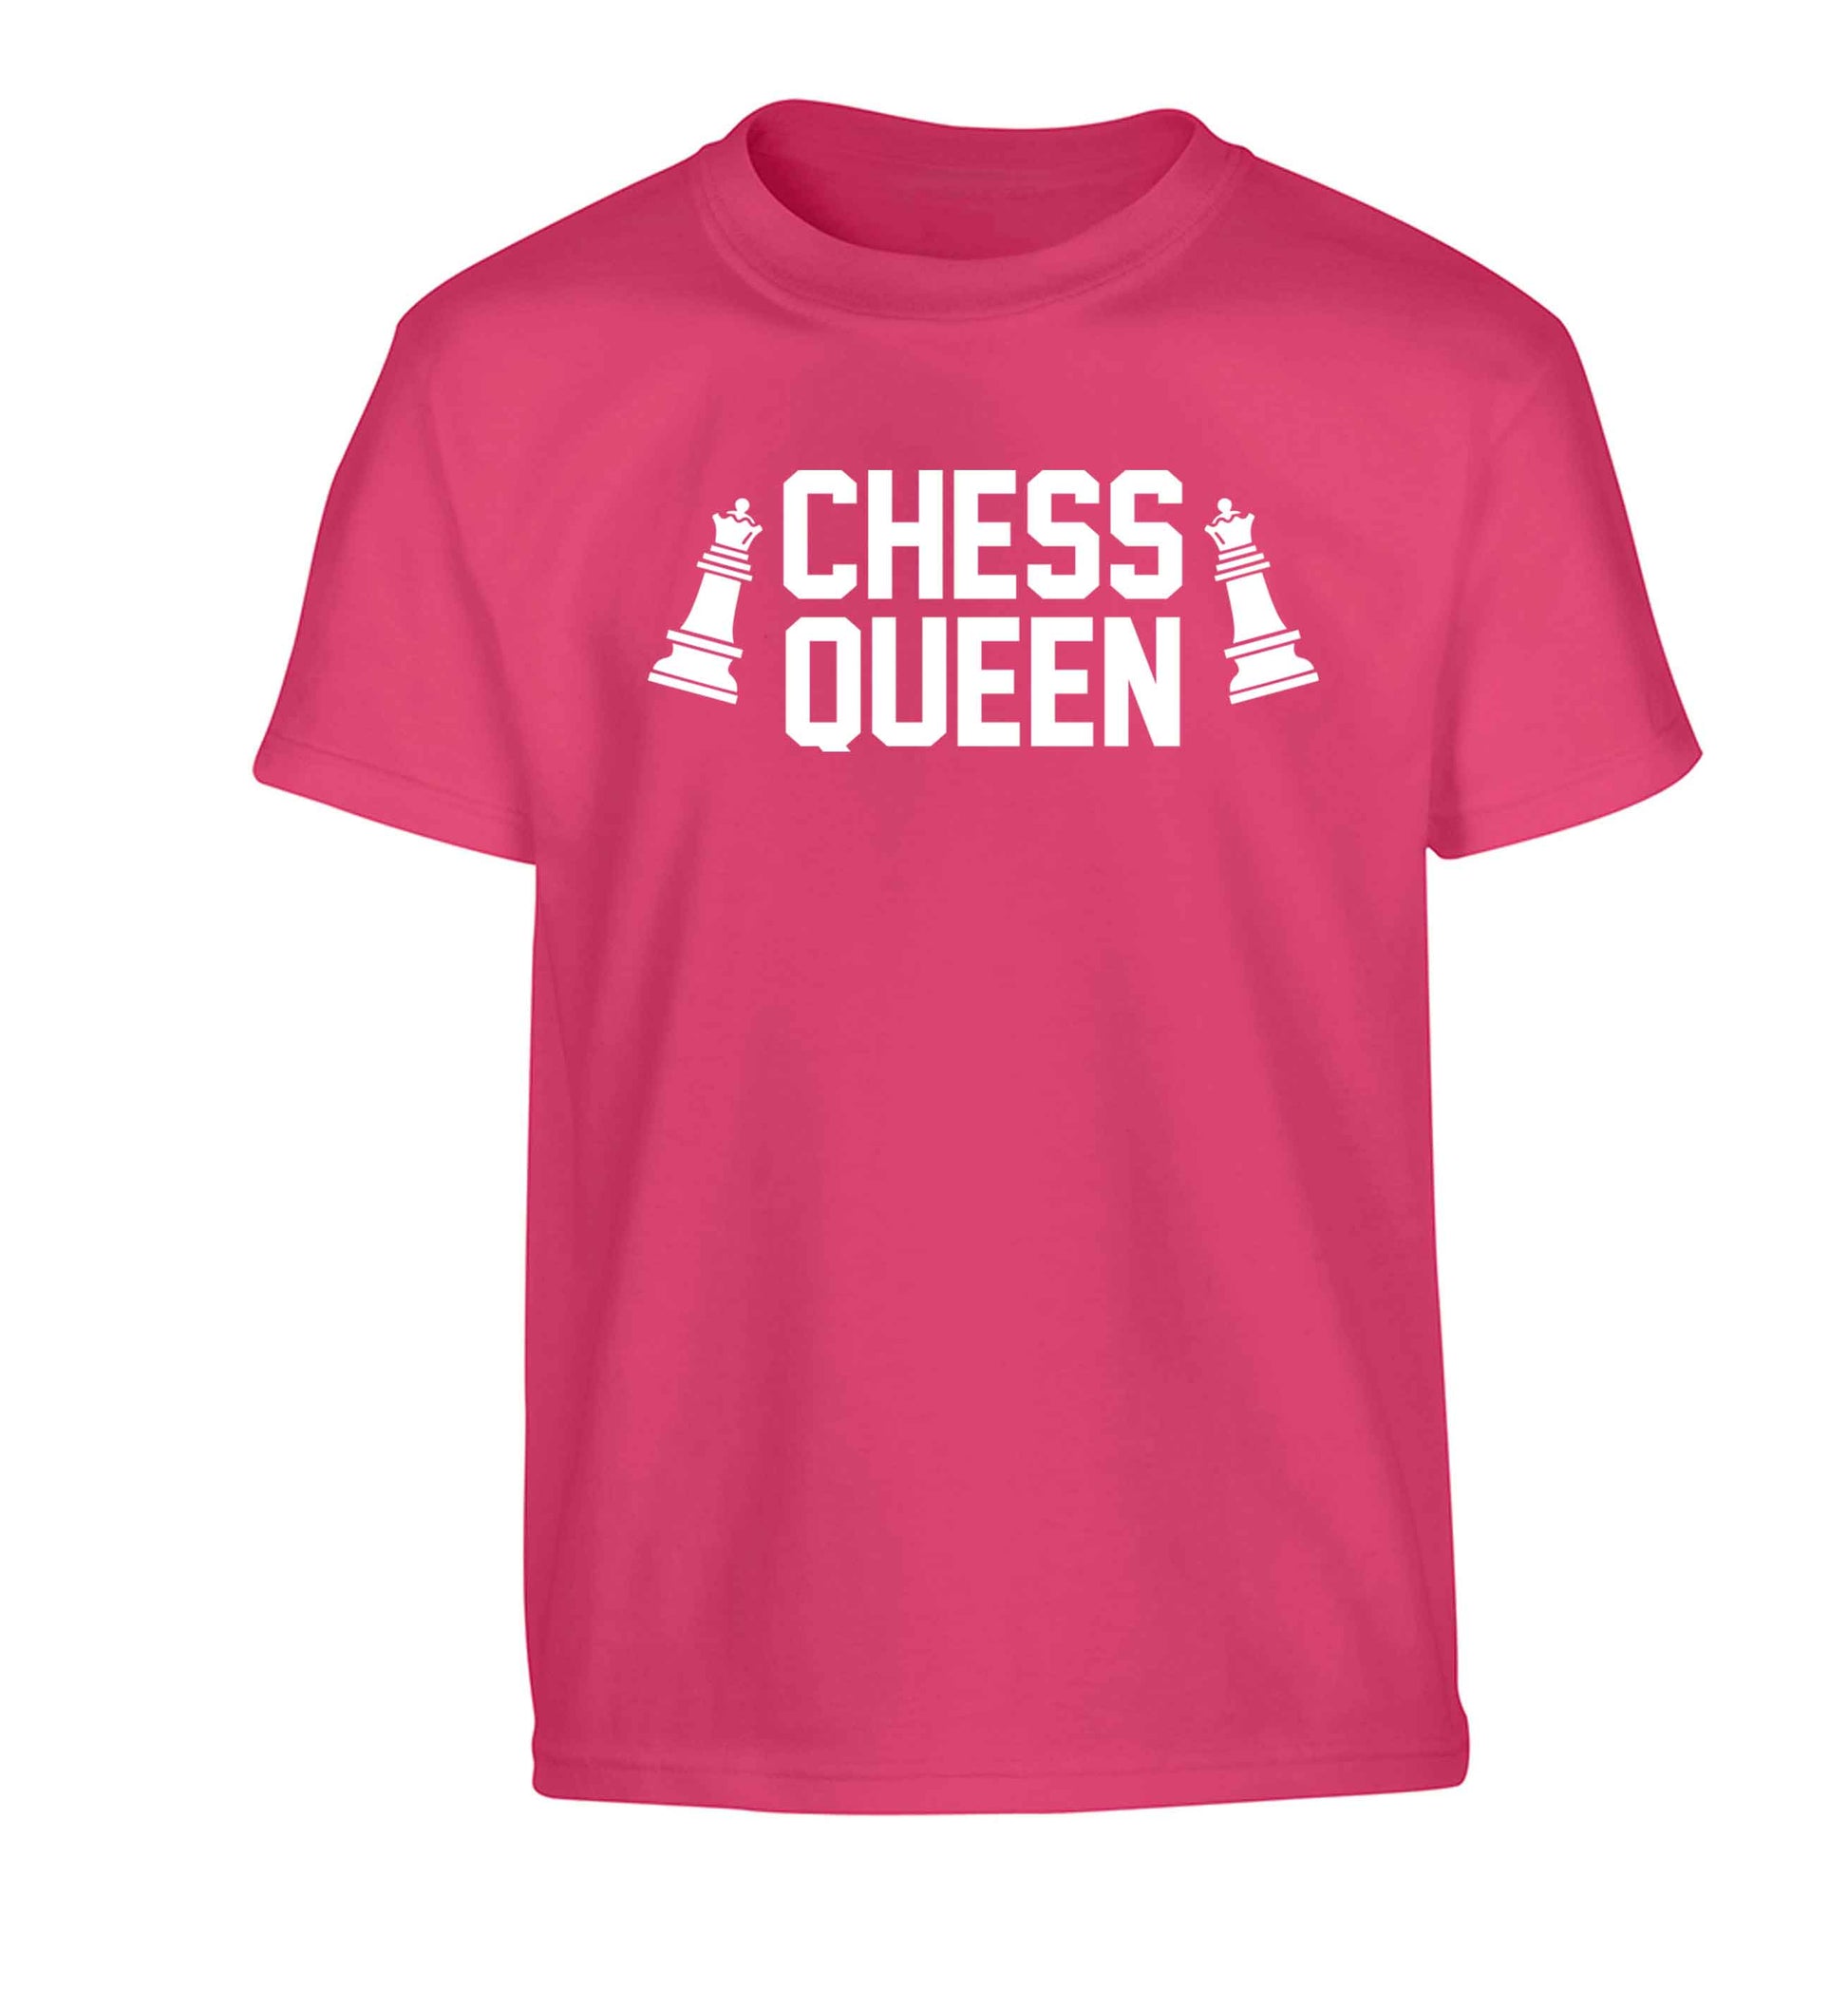 Chess queen Children's pink Tshirt 12-13 Years